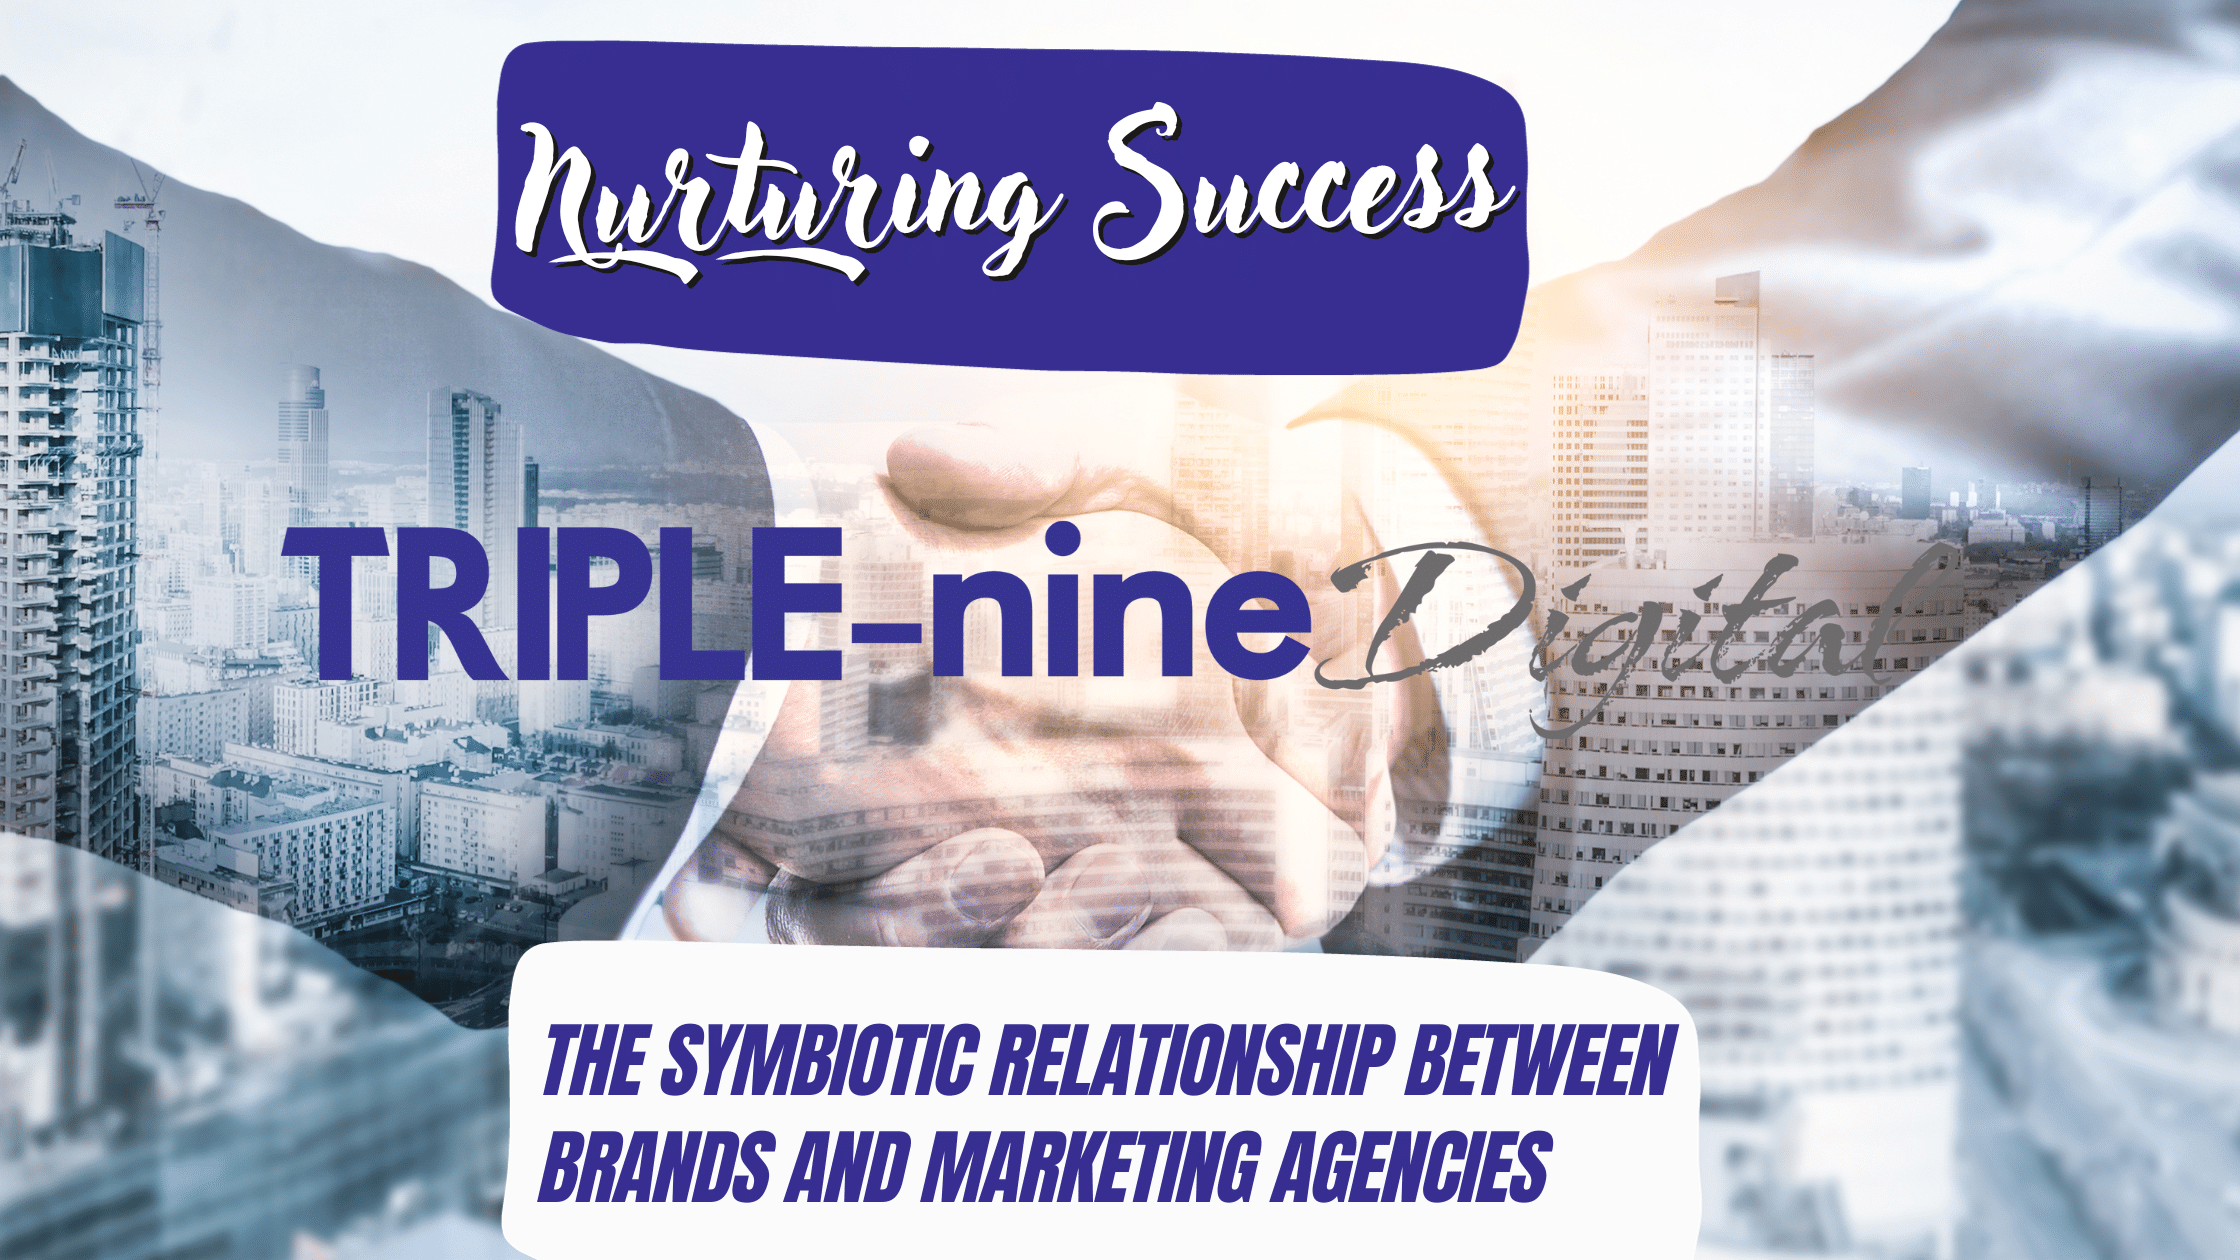 Nurturing Success: The Symbiotic Relationship Between Brands and Marketing Agencies